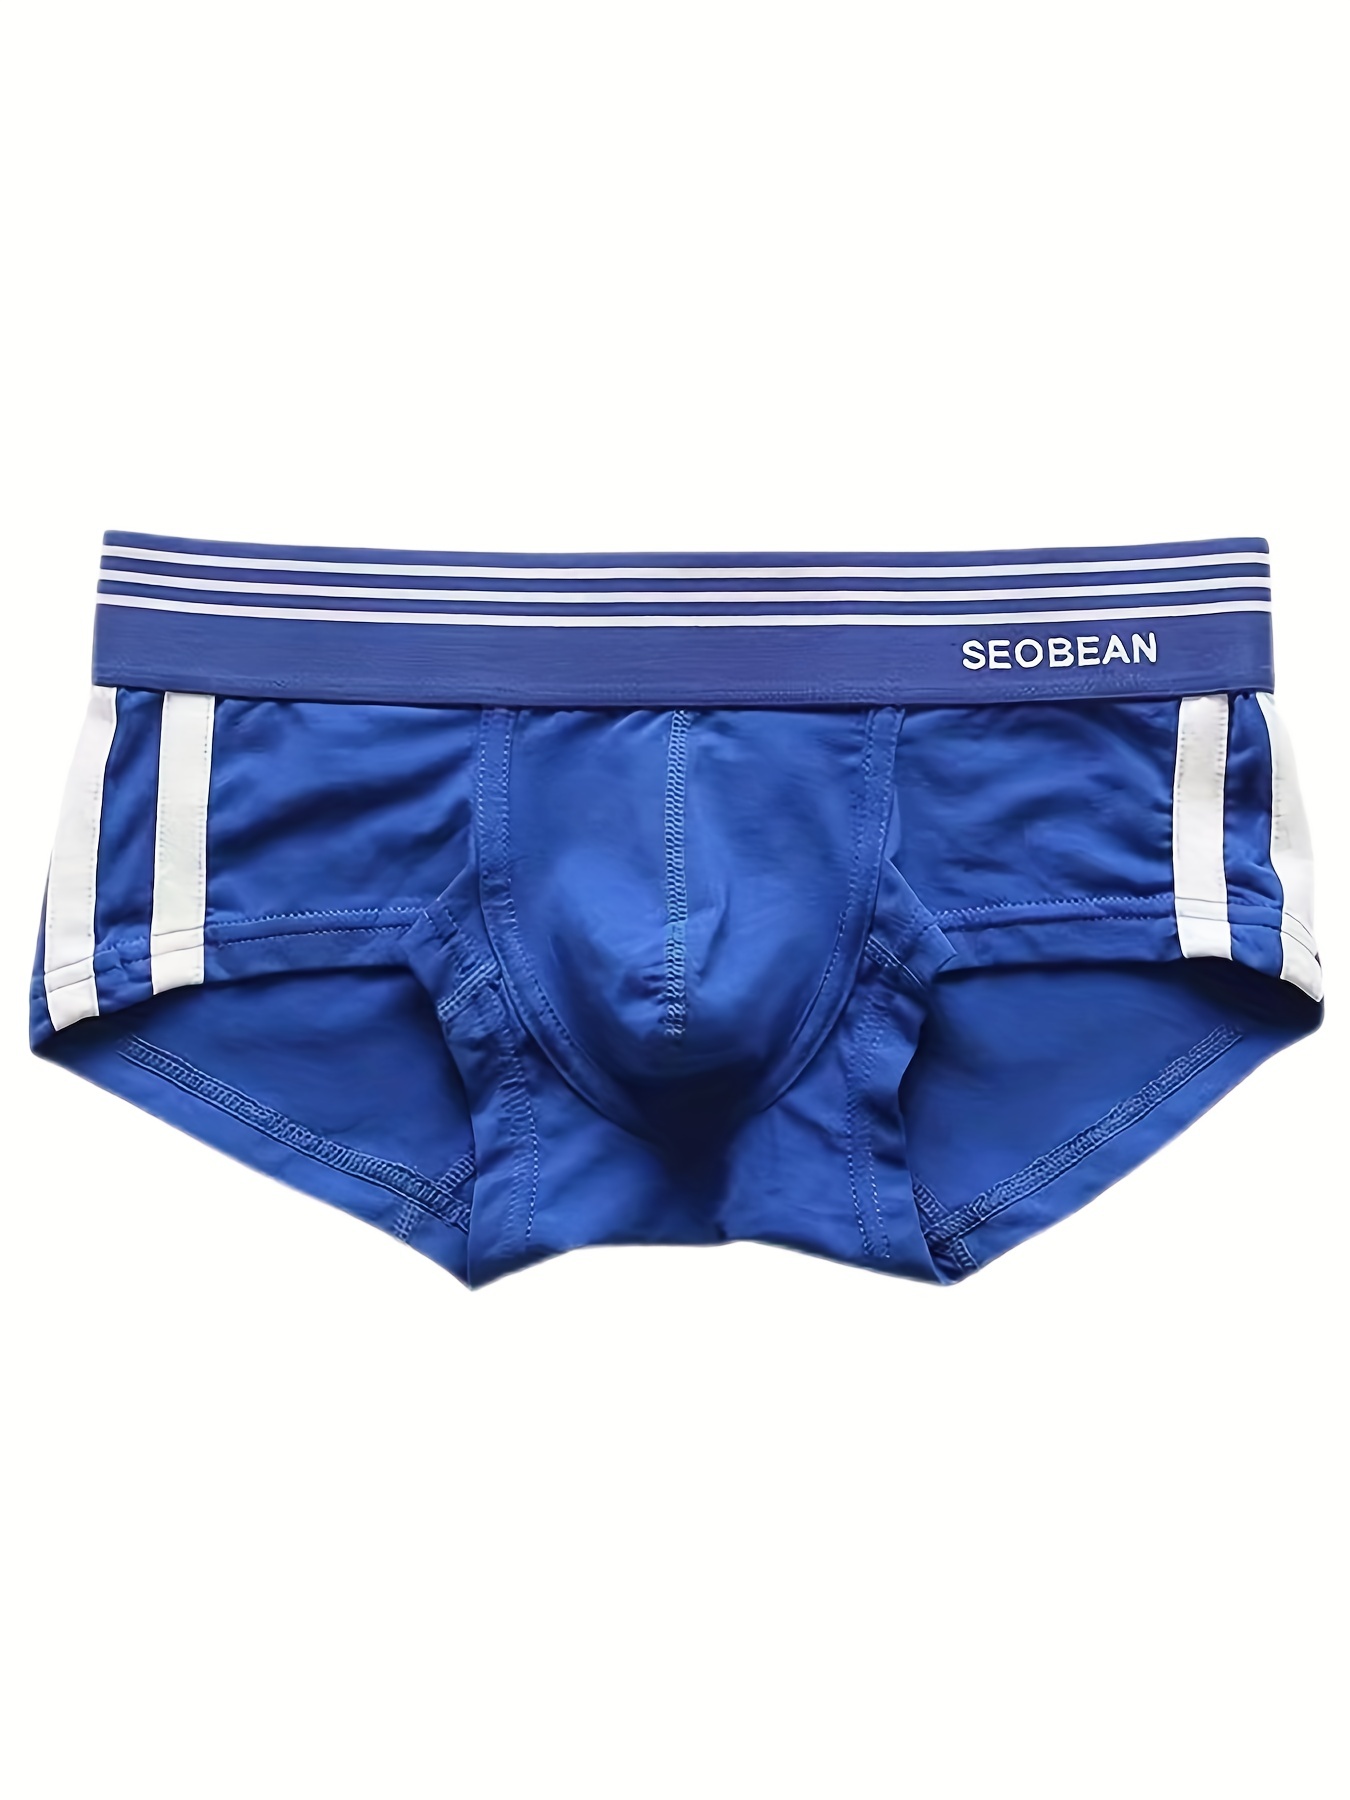 Men's Low-rise Sexy Comfy Boxer Briefs Pouch Shorts Trunks Underwear  Underpants